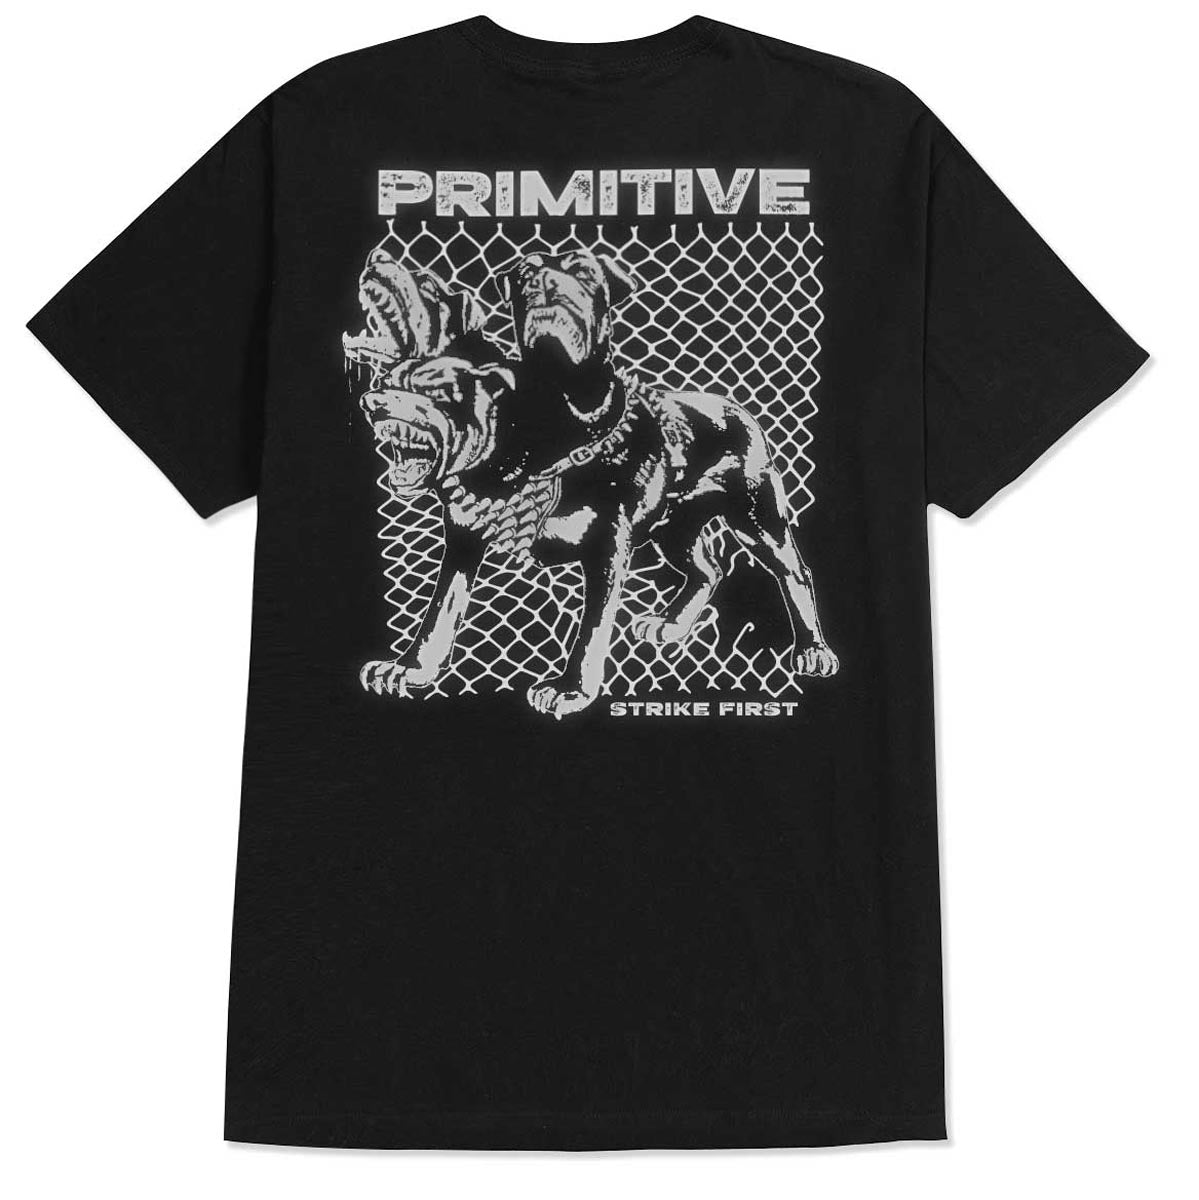 Primitive Warnings T-Shirt - Black image 1